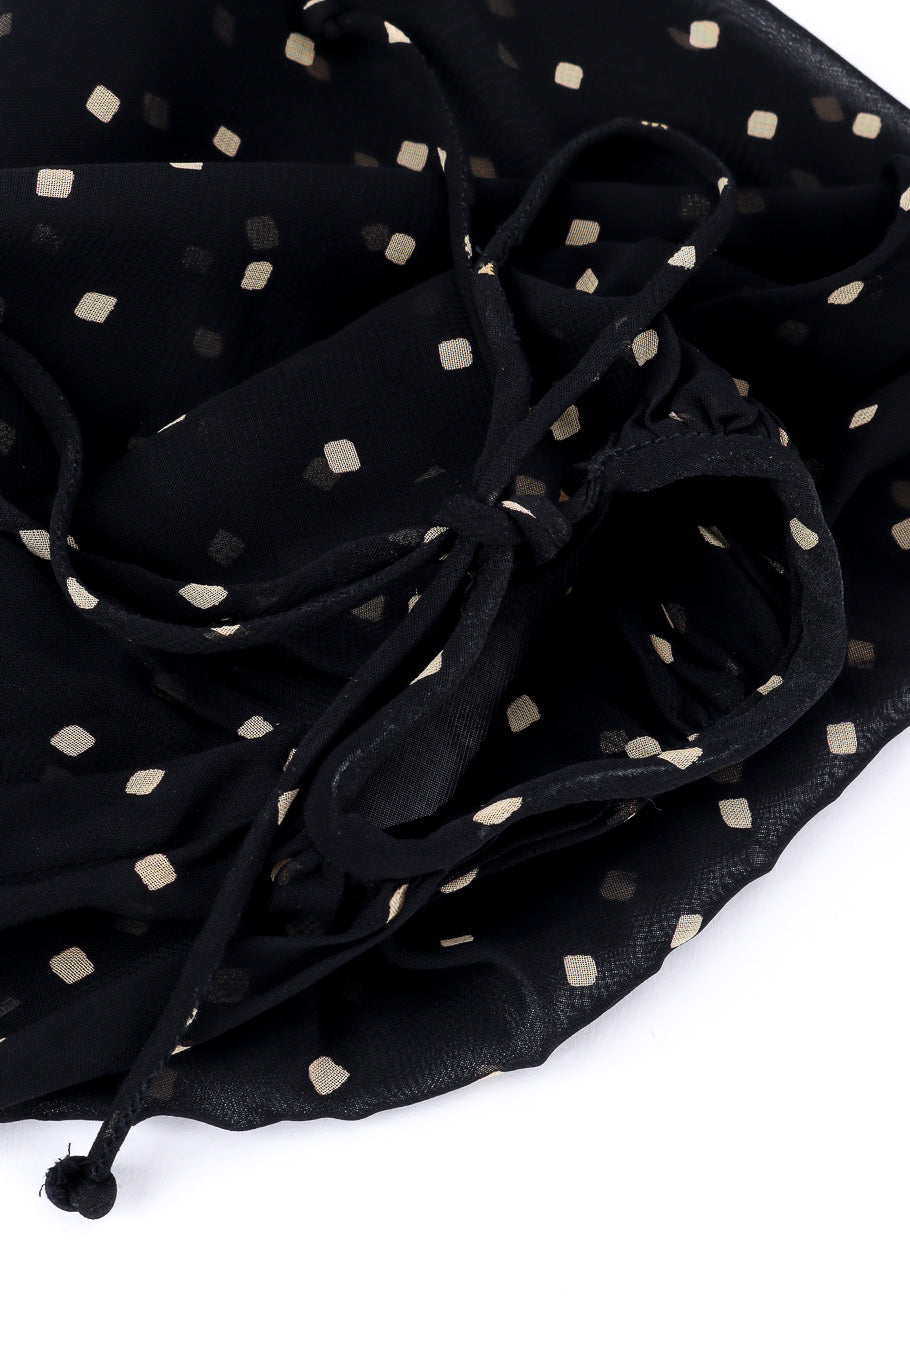 Donna Karan Diamond Dot Ruffle Dress sleeve tie closeup @Recessla